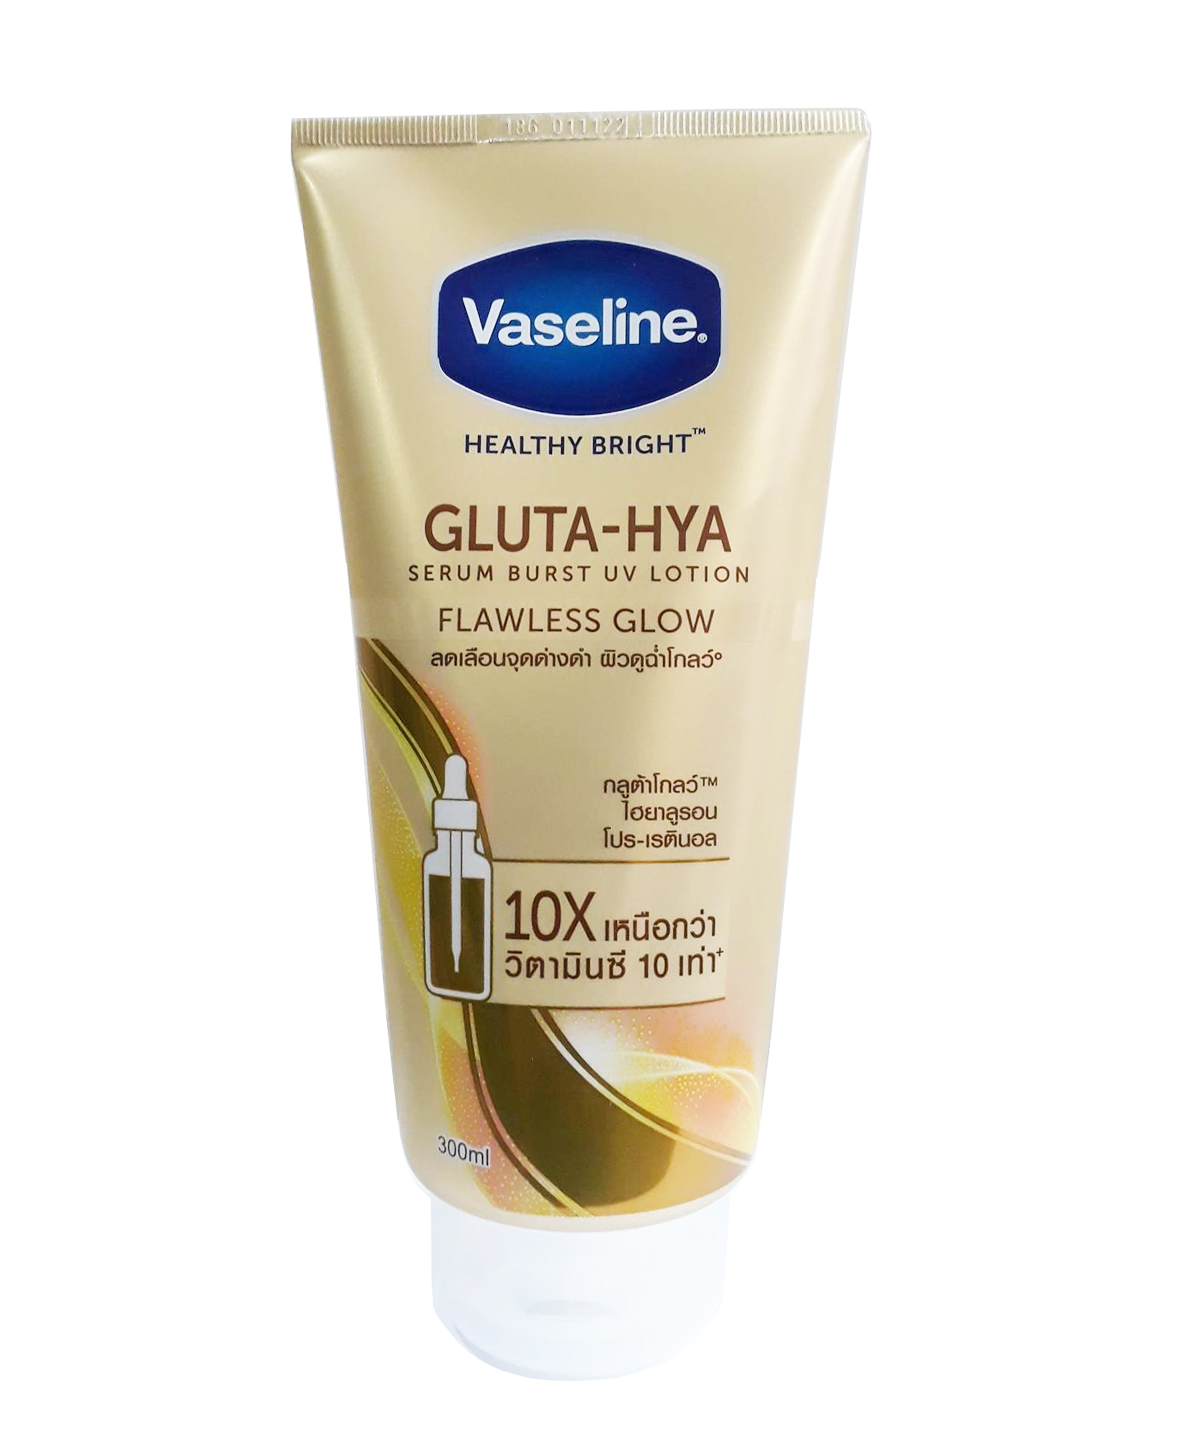 Vaseline Gluta-HYA Serum Burst Lotion pour le corps UV, 300 ml